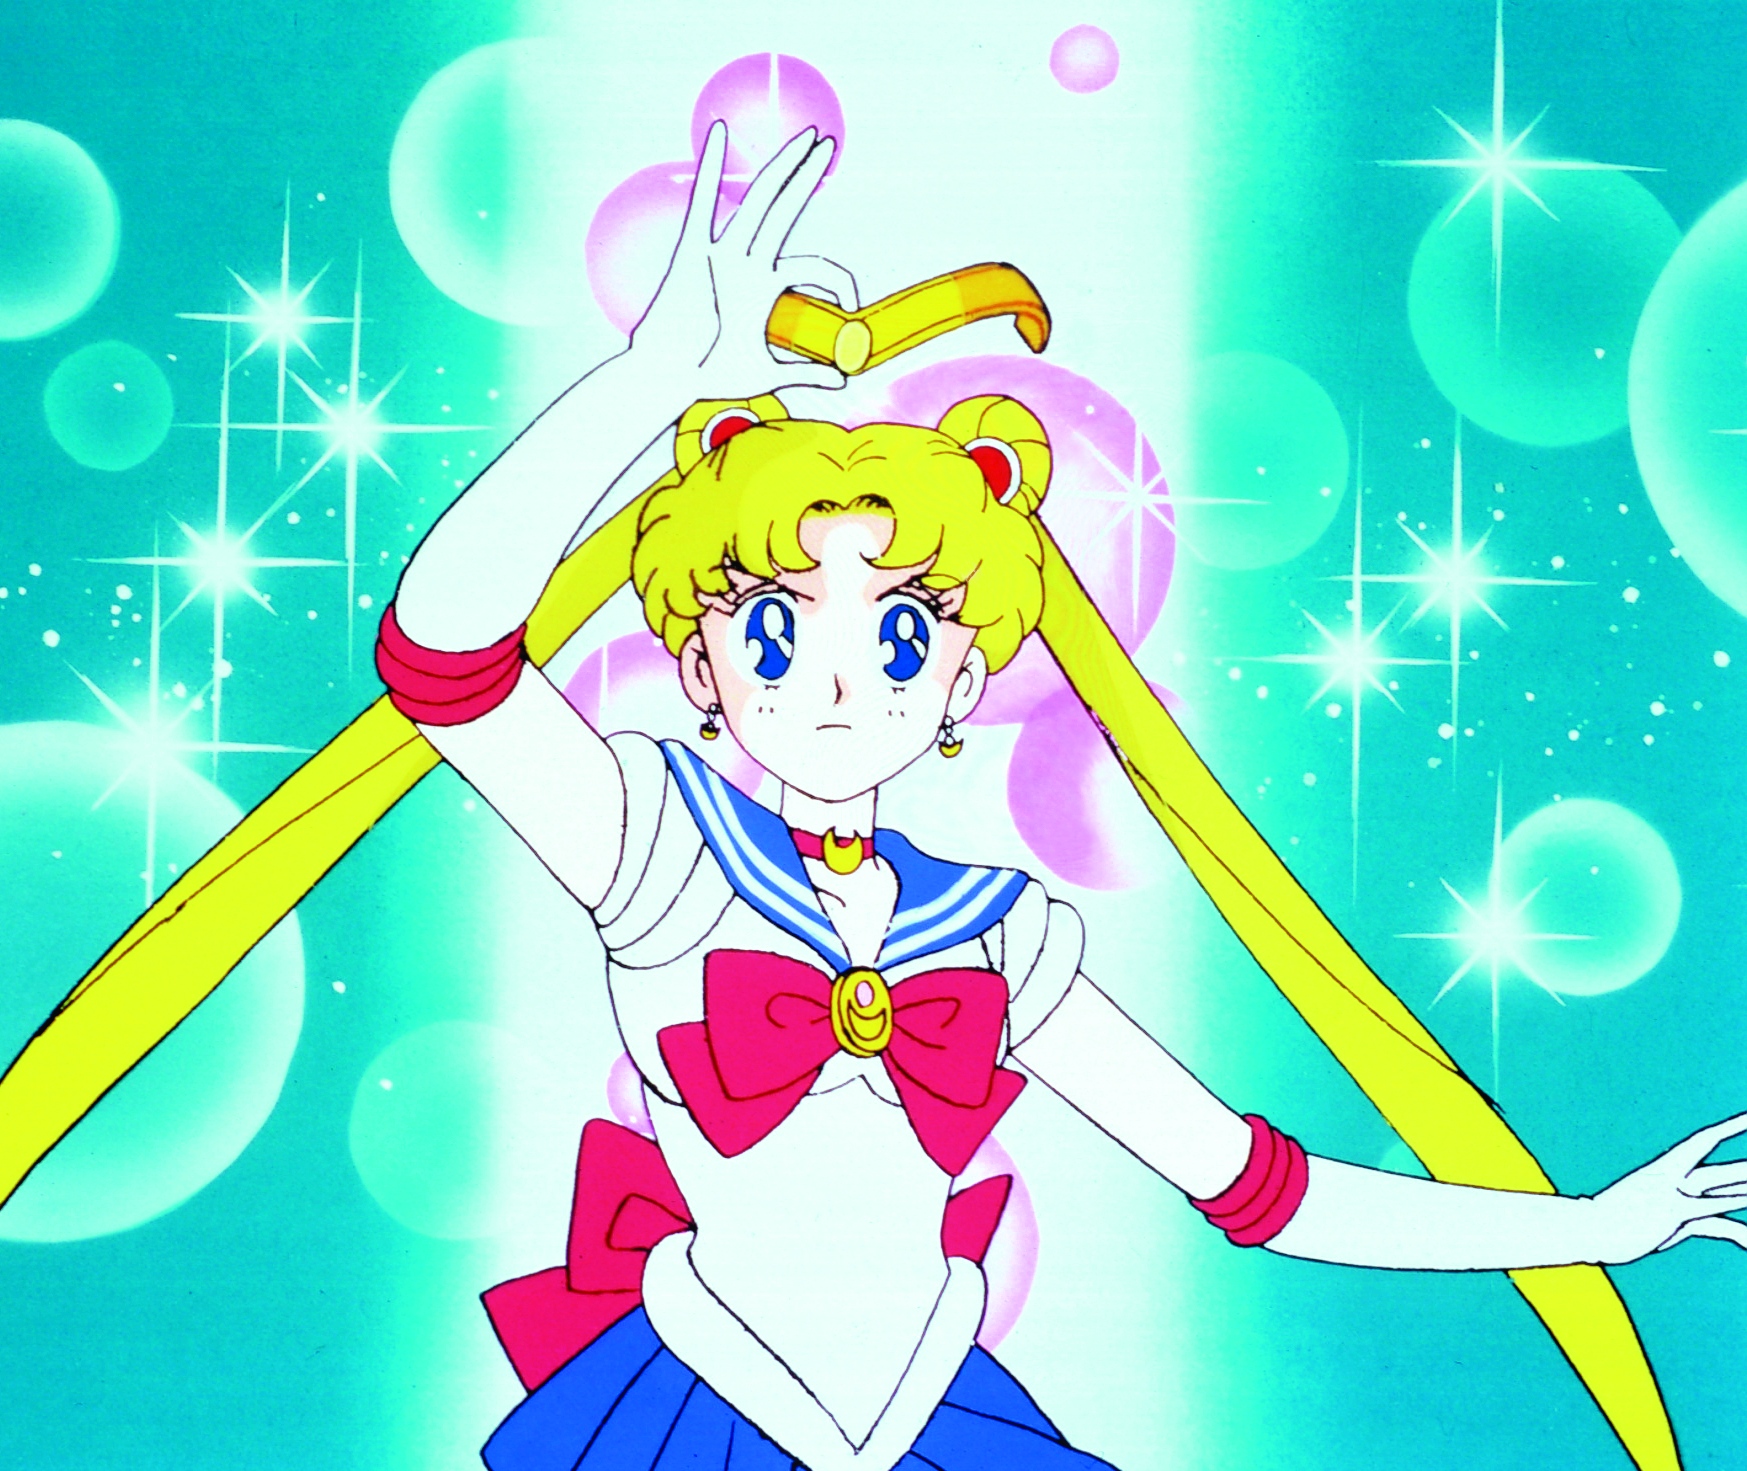 Szenenfoto von Sailor Moon aus der Animationsserie Sailor Moon (Japan 1992-1997)